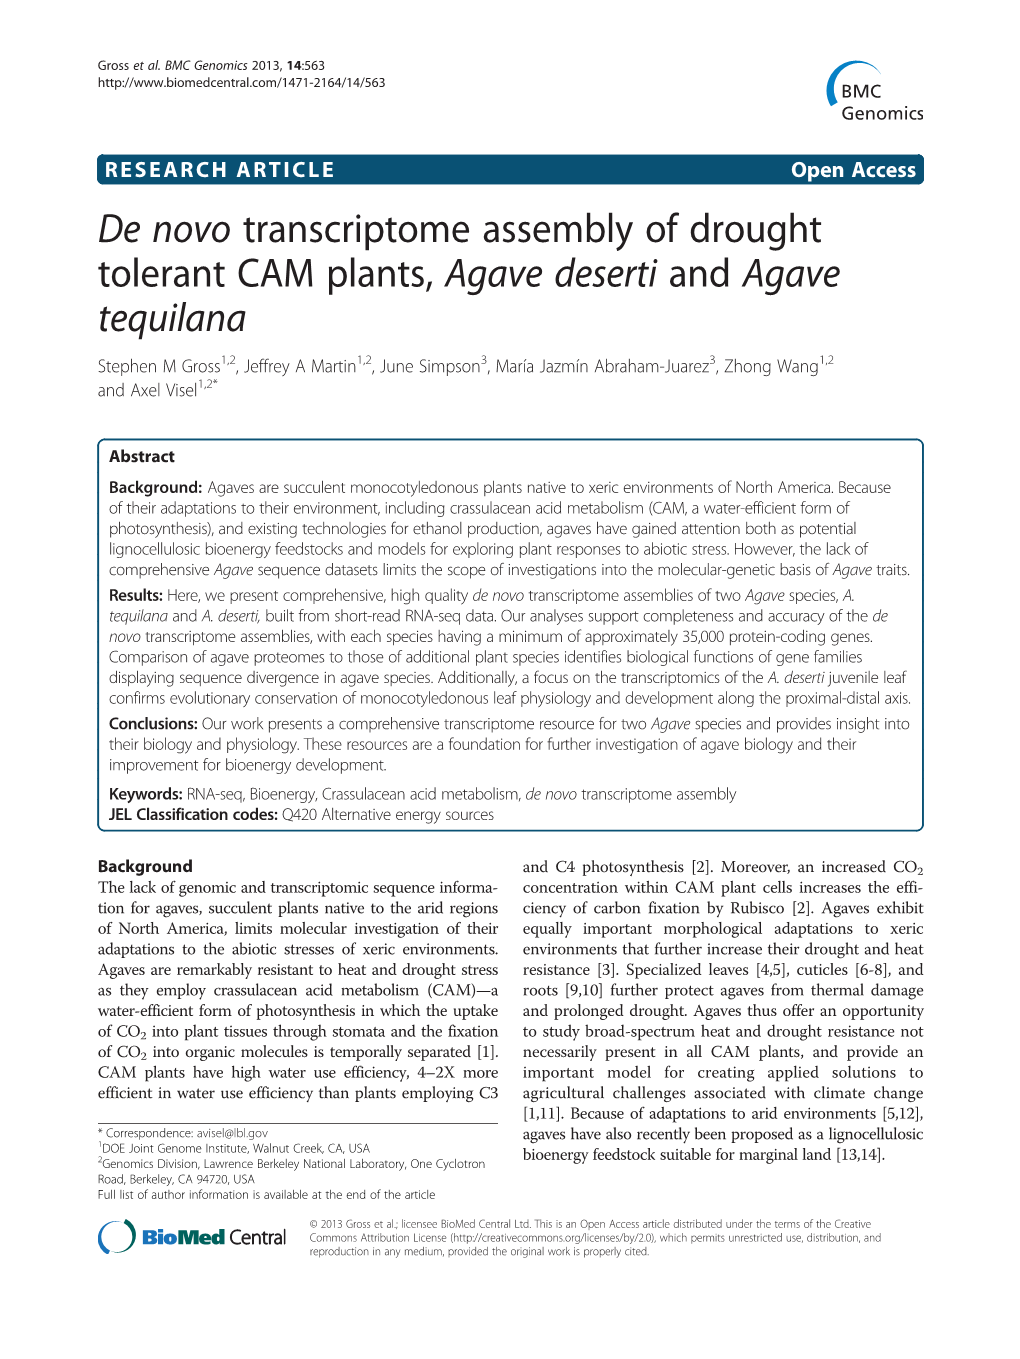 De Novo Transcriptome Assembly of Drought Tolerant